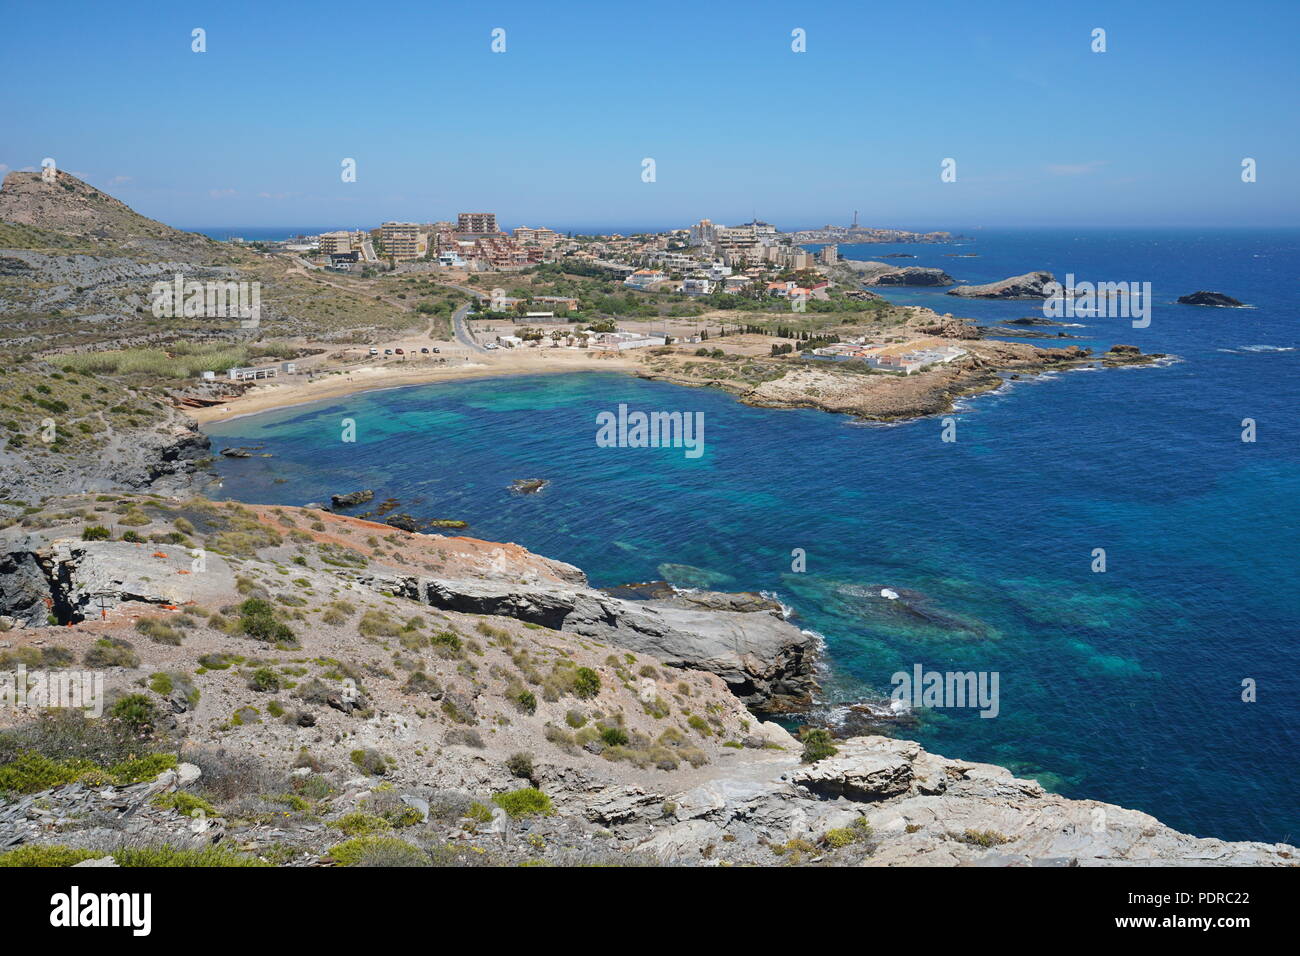 Spain coastal landscape, rocky coast with sandy beach in the seaside town Cabo de Palos, Cartagena, Murcia, Mediterranean sea Stock Photo